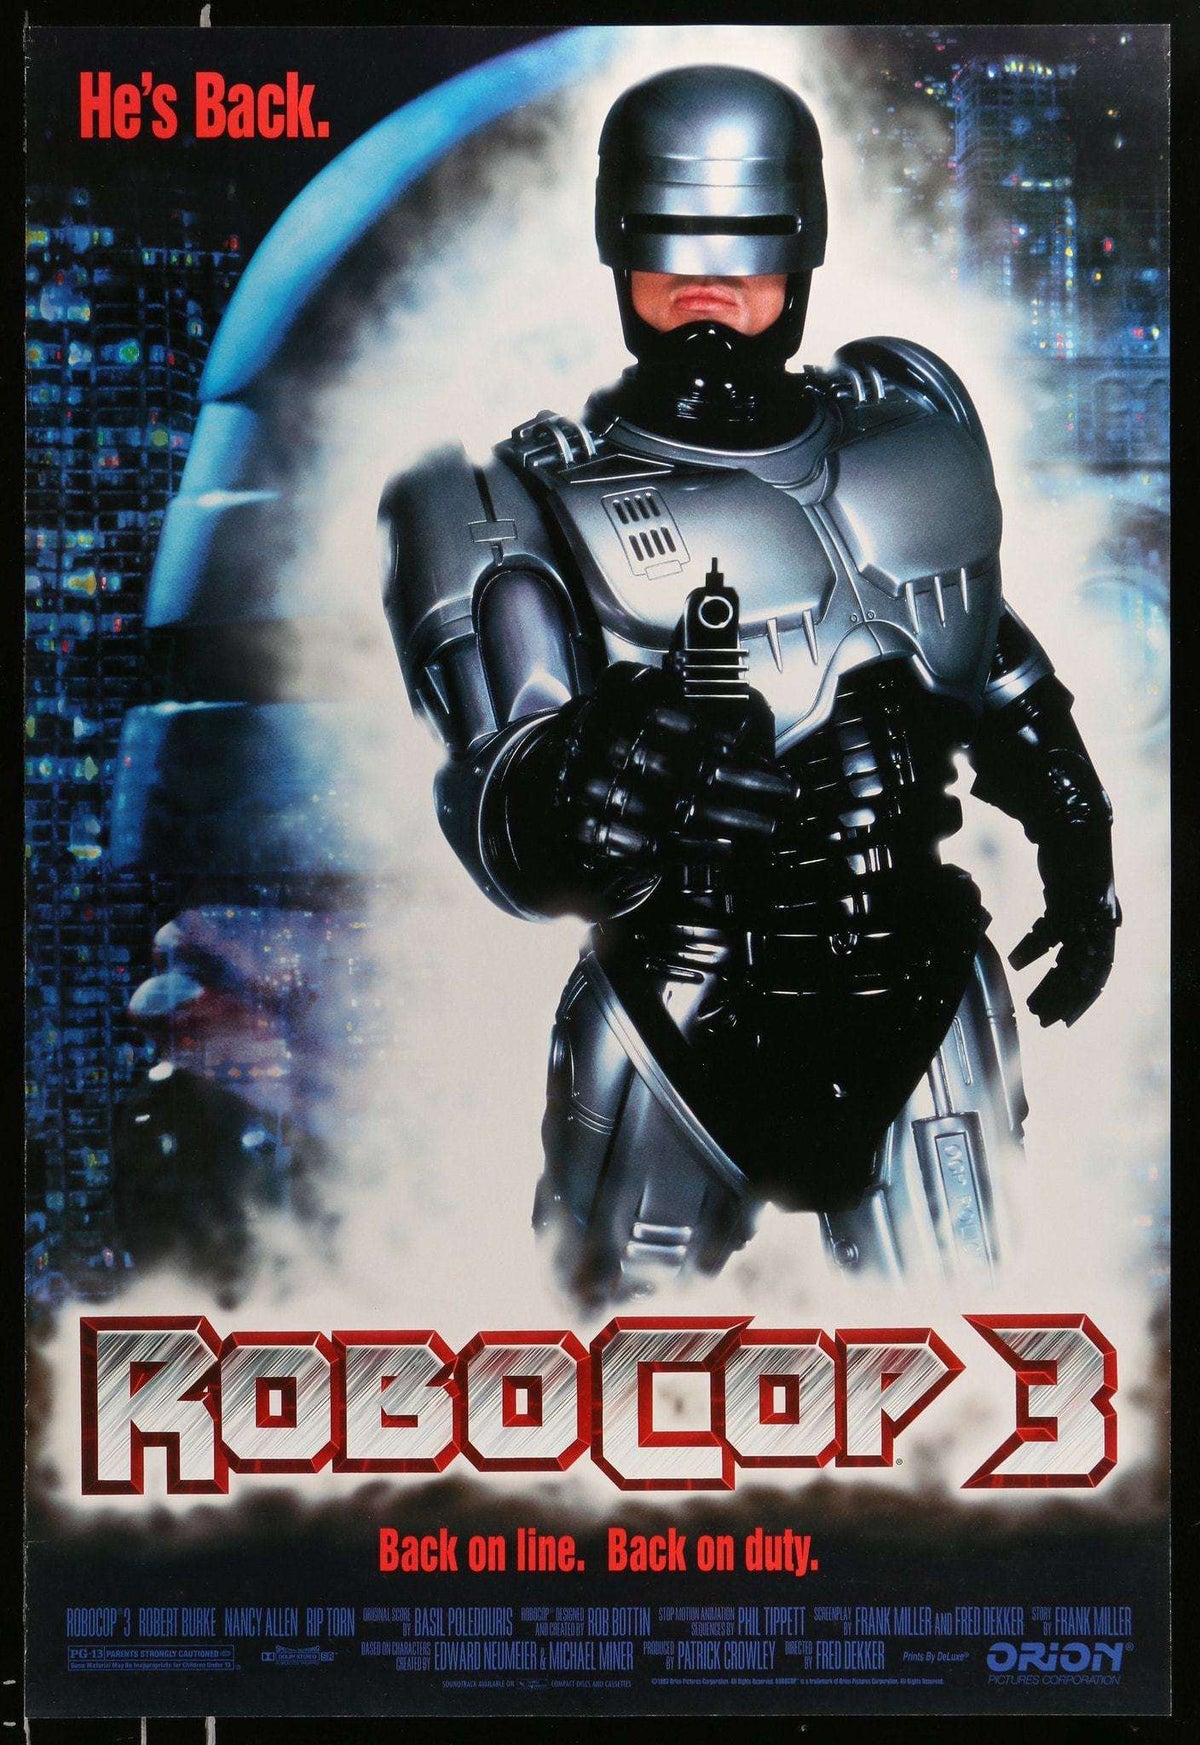 Robocop 3 (1993) original movie poster for sale at Original Film Art